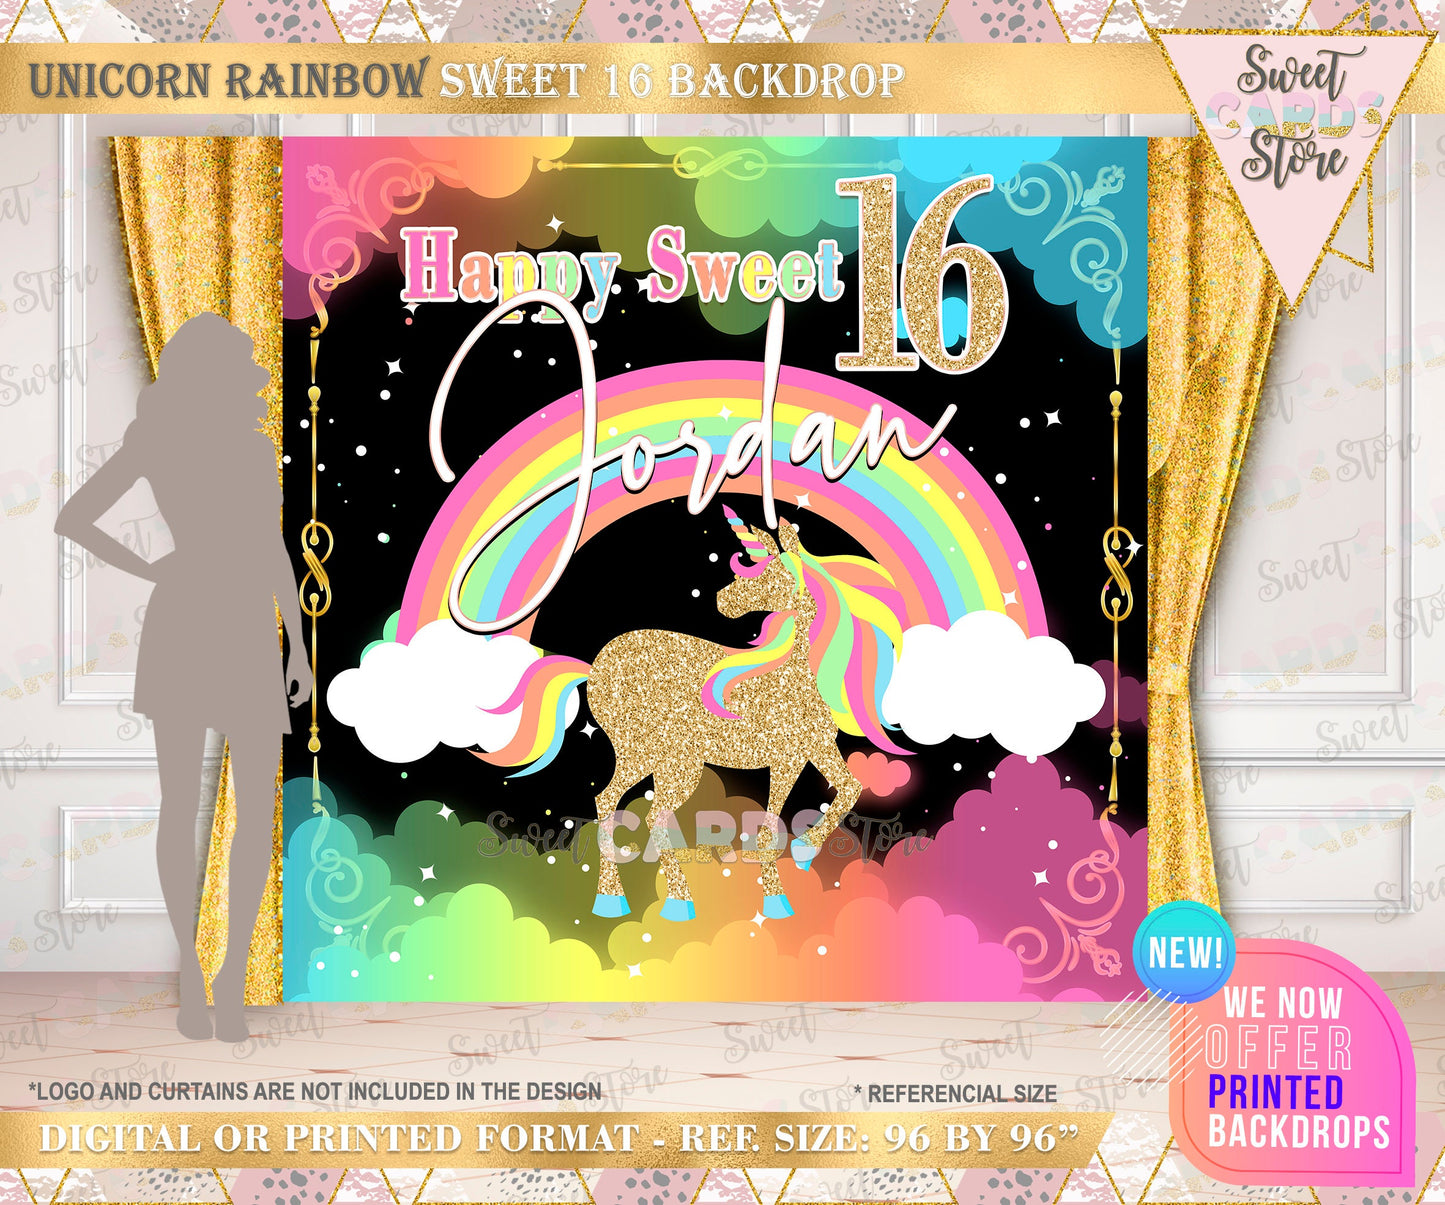 Unicorn printable digital backdrop, unicorn party, unicorn sweet 16 backdrop decor, unicorn birthday, unicorn banner, unicorn baby shower